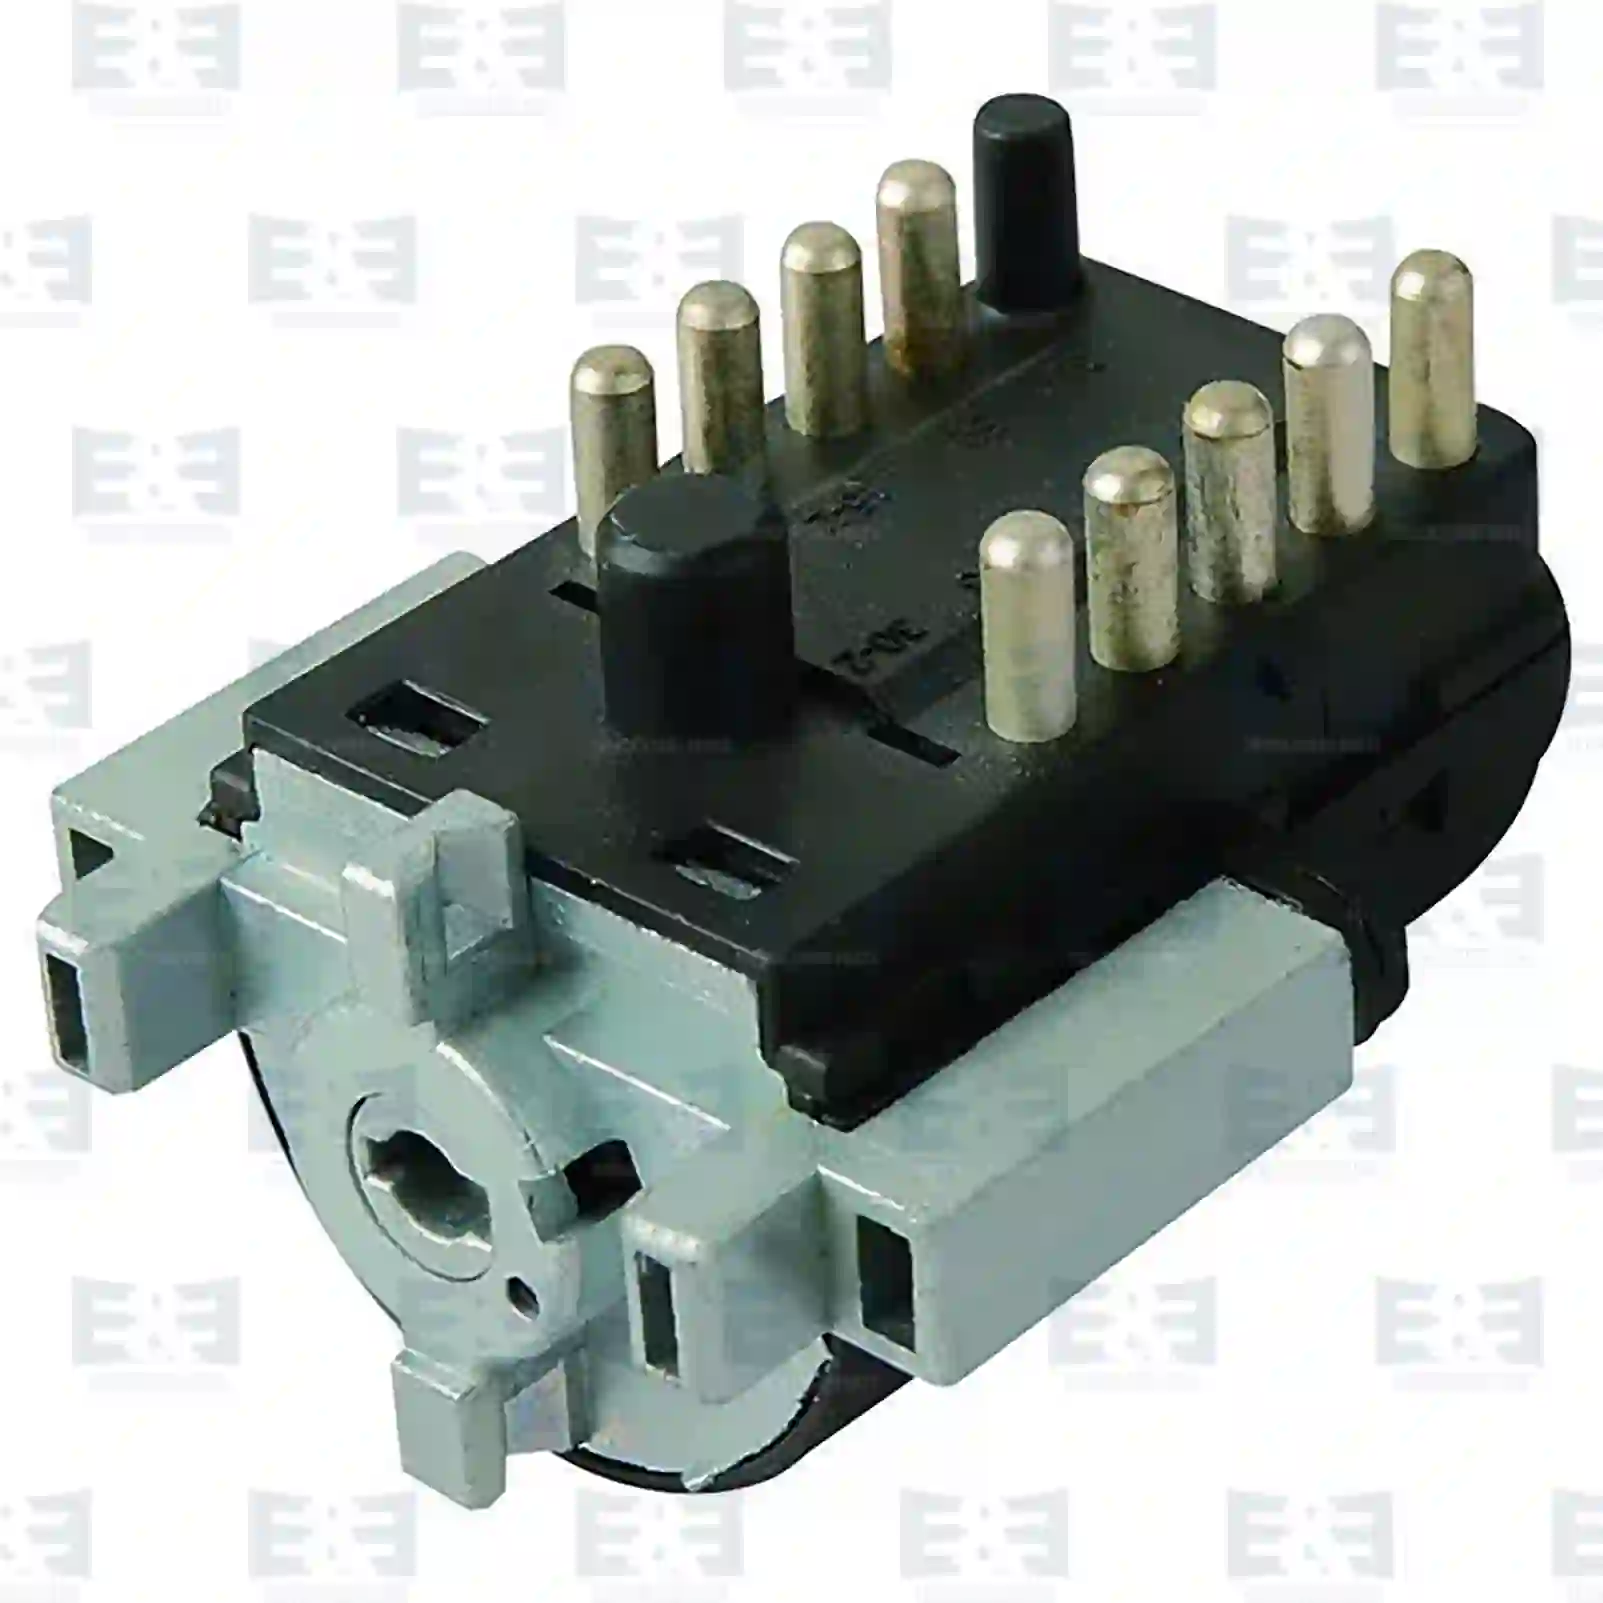  Ignition switch || E&E Truck Spare Parts | Truck Spare Parts, Auotomotive Spare Parts